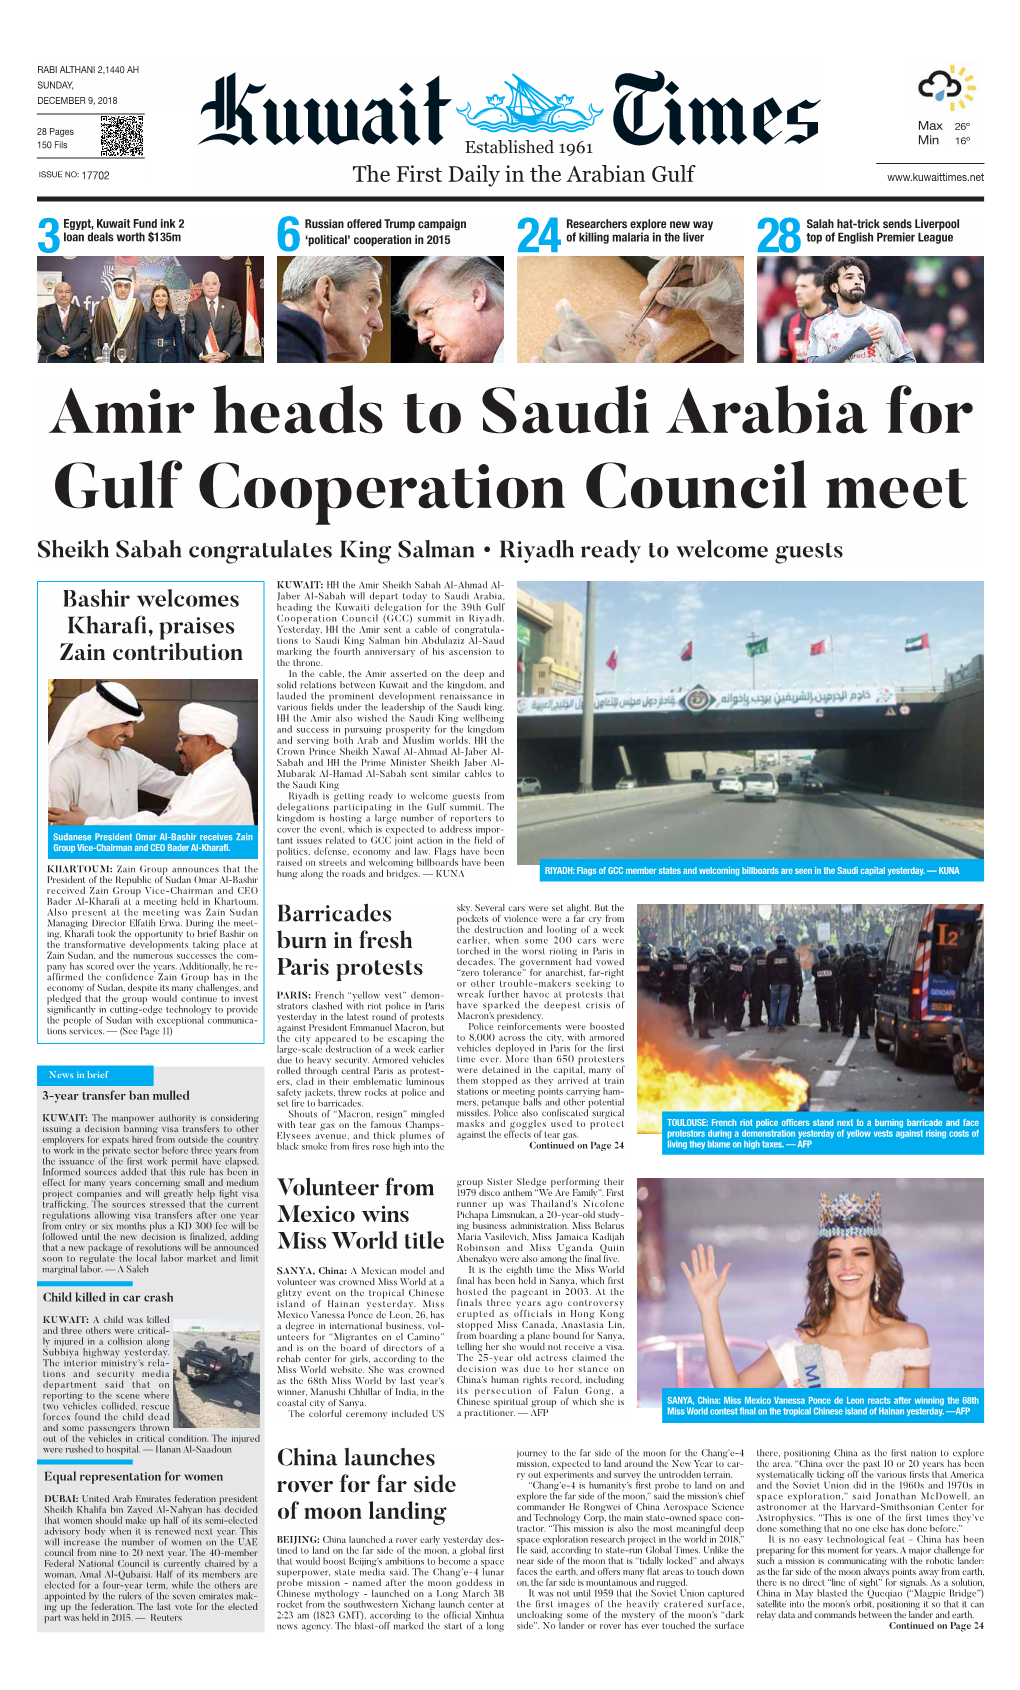 Amir Heads to Saudi Arabia for Gulf Cooperation Council Meet